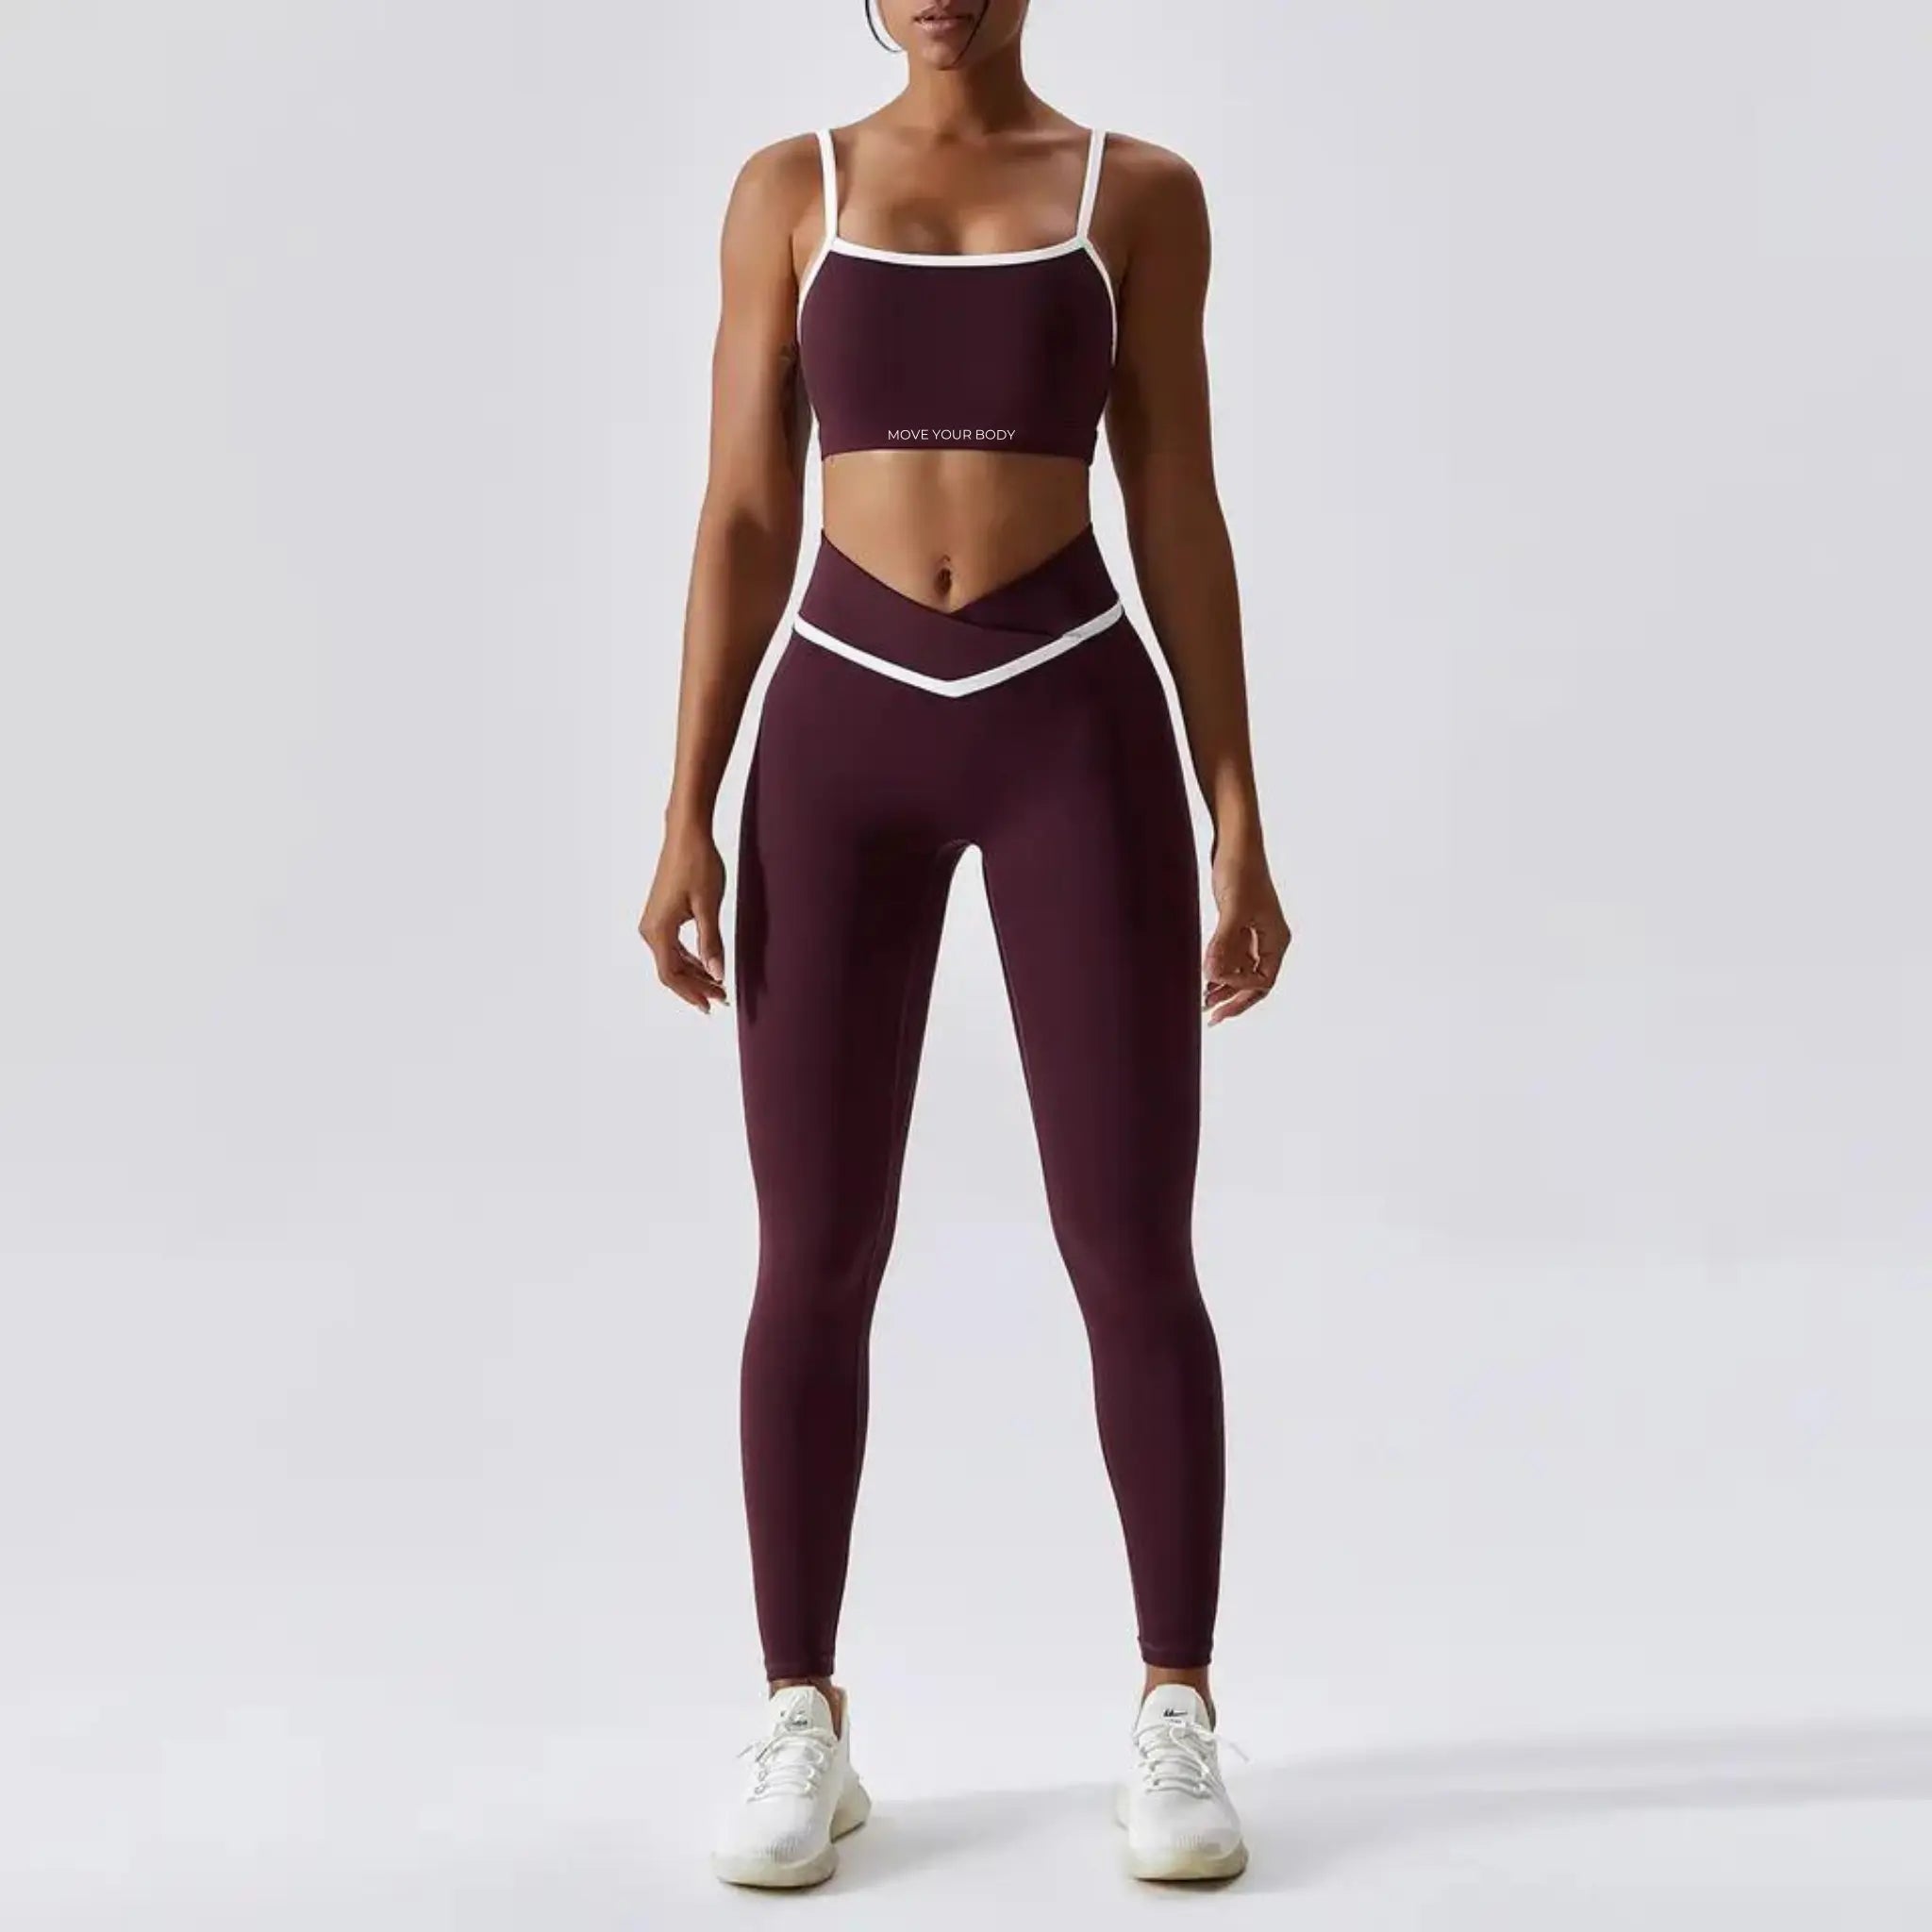 AUROLA Dream Collection Workout Leggings for Women High Waist Seamless  Scrunch Athletic Running Gym Fitness Active Pants Medium Dark Black